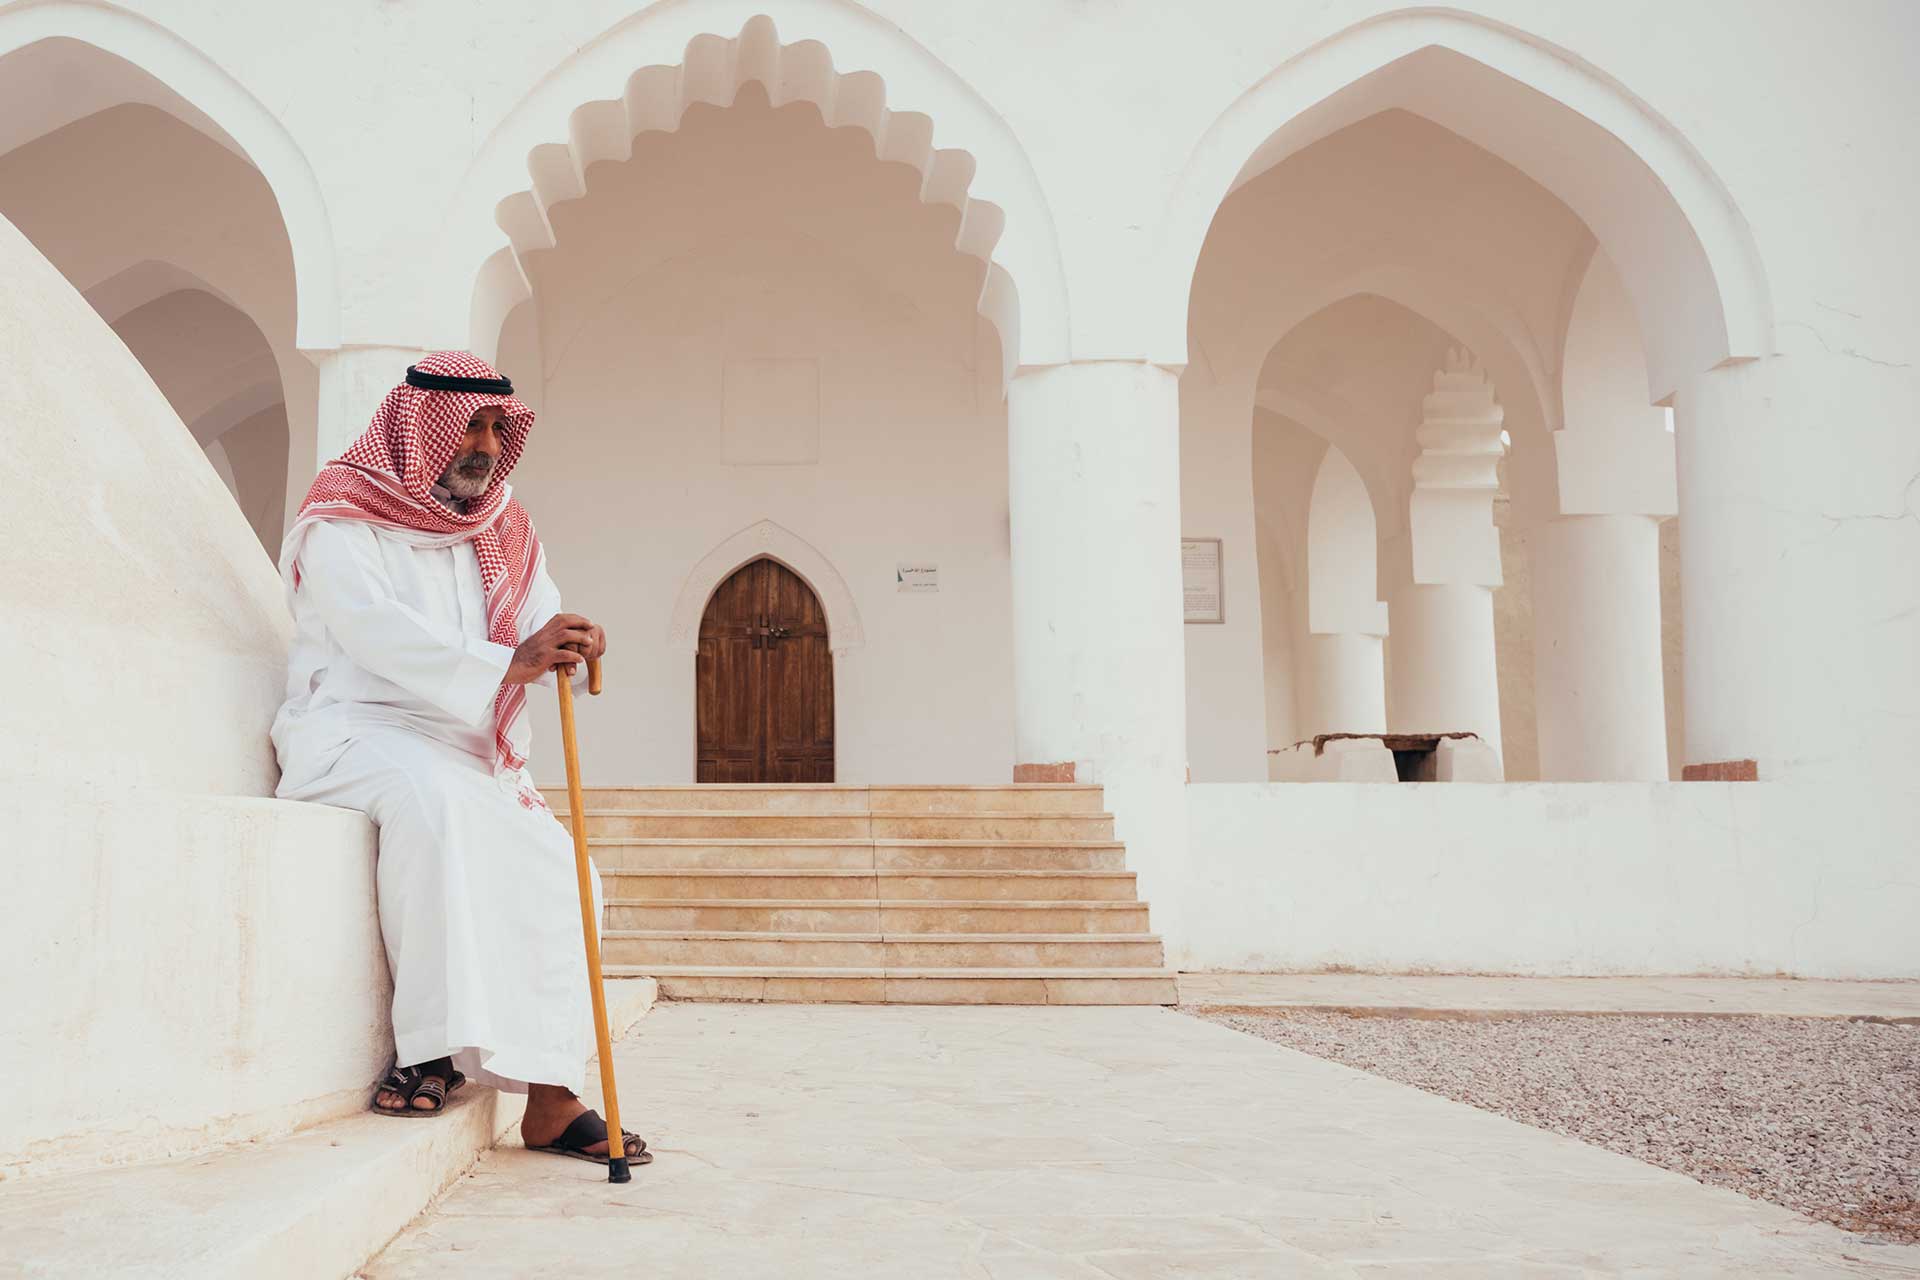 al-ahsa-saudi-arabia – La boite verte